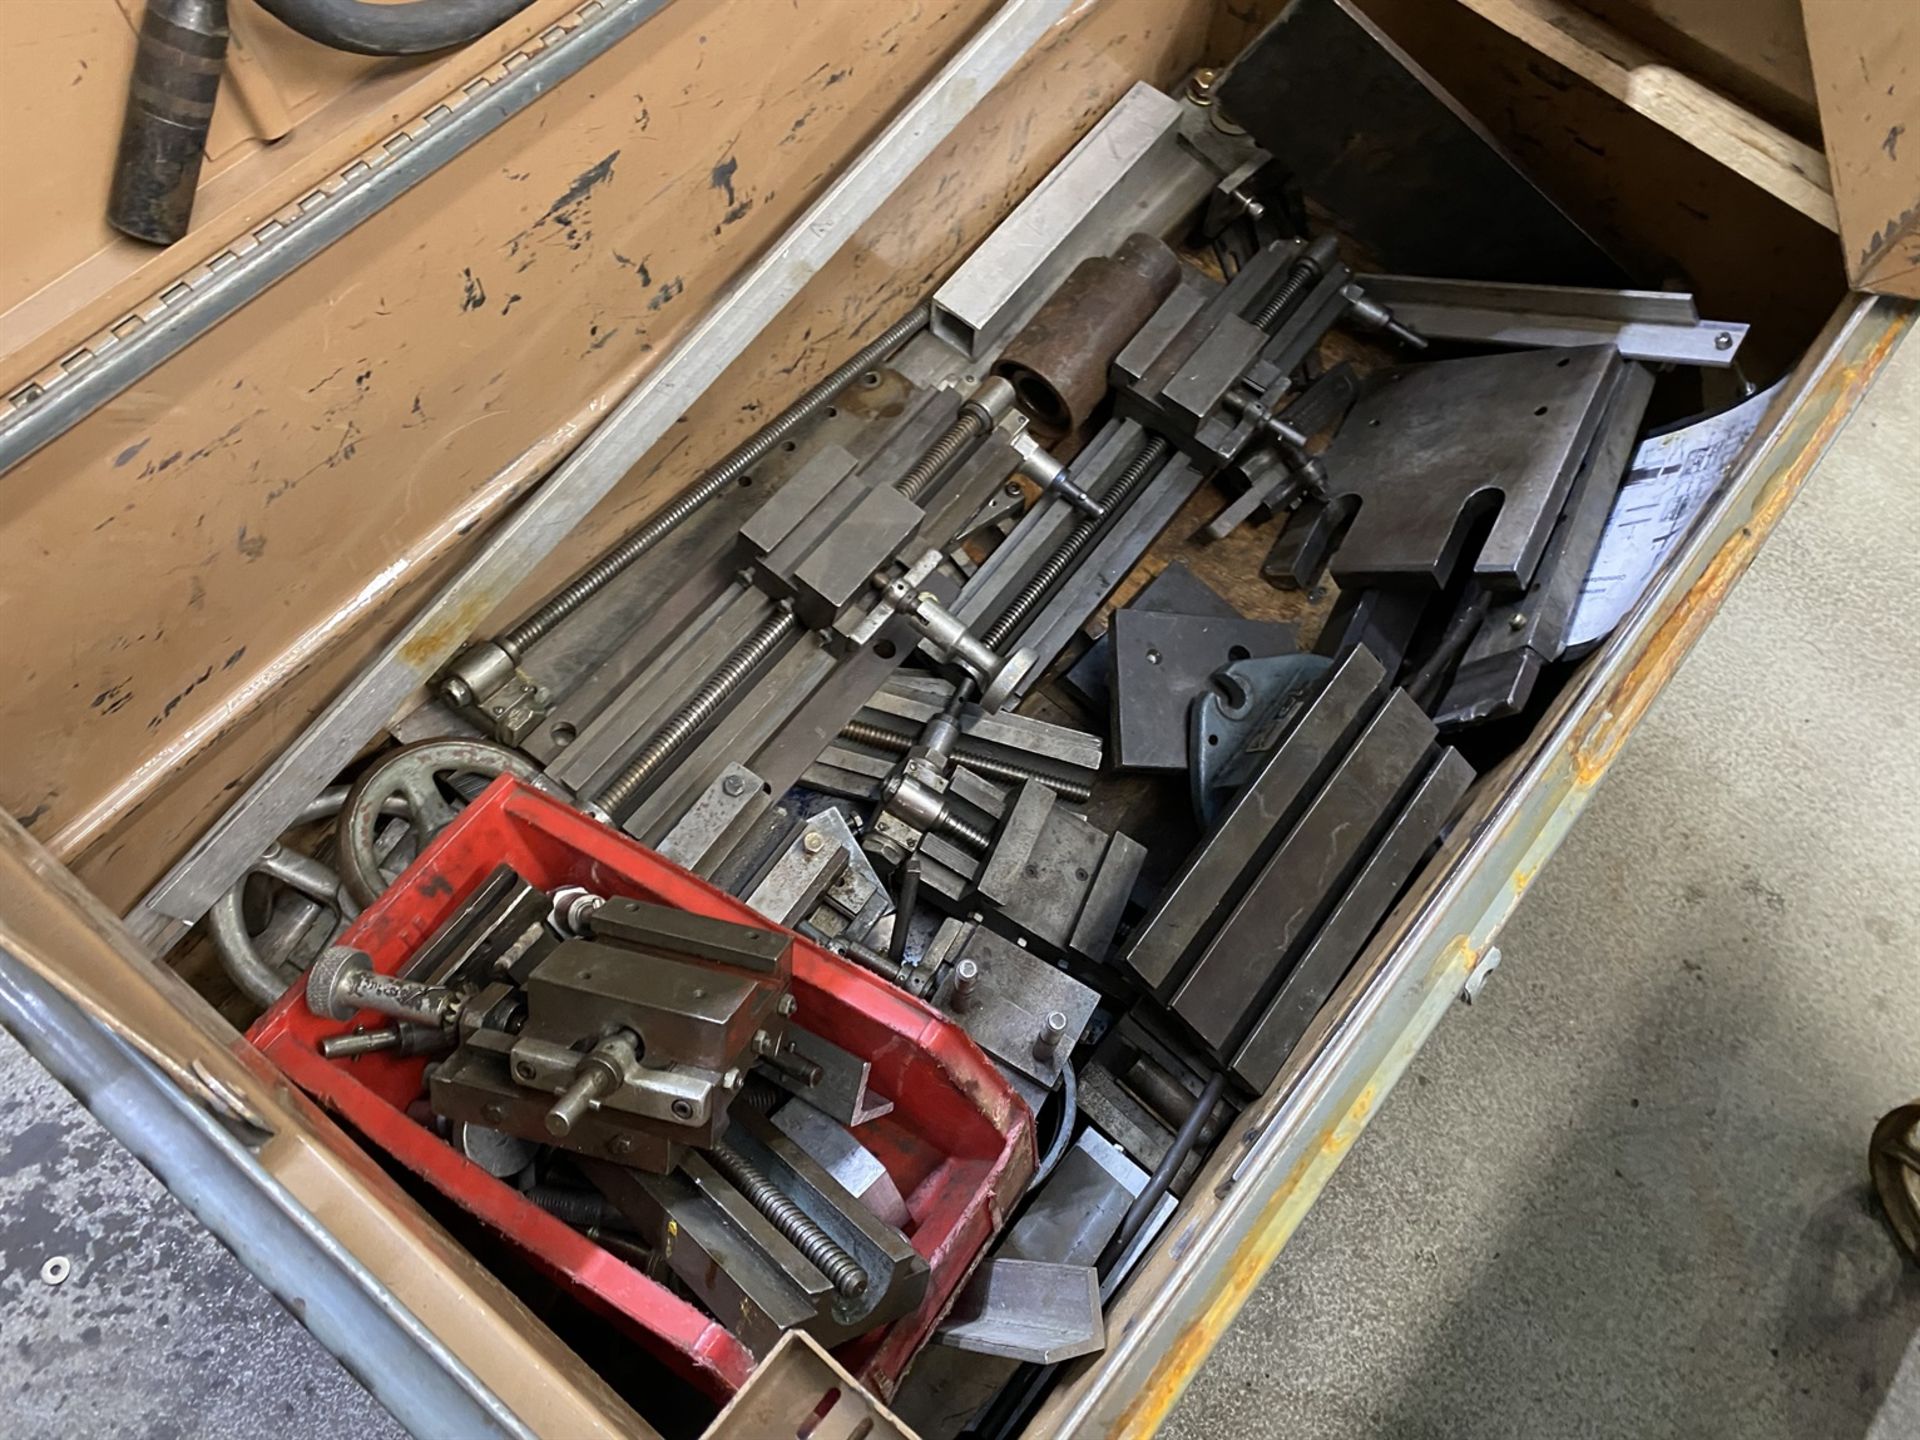 Lot Comprising Gang Box of Commutator Bearing Grinder Tools - Image 3 of 6